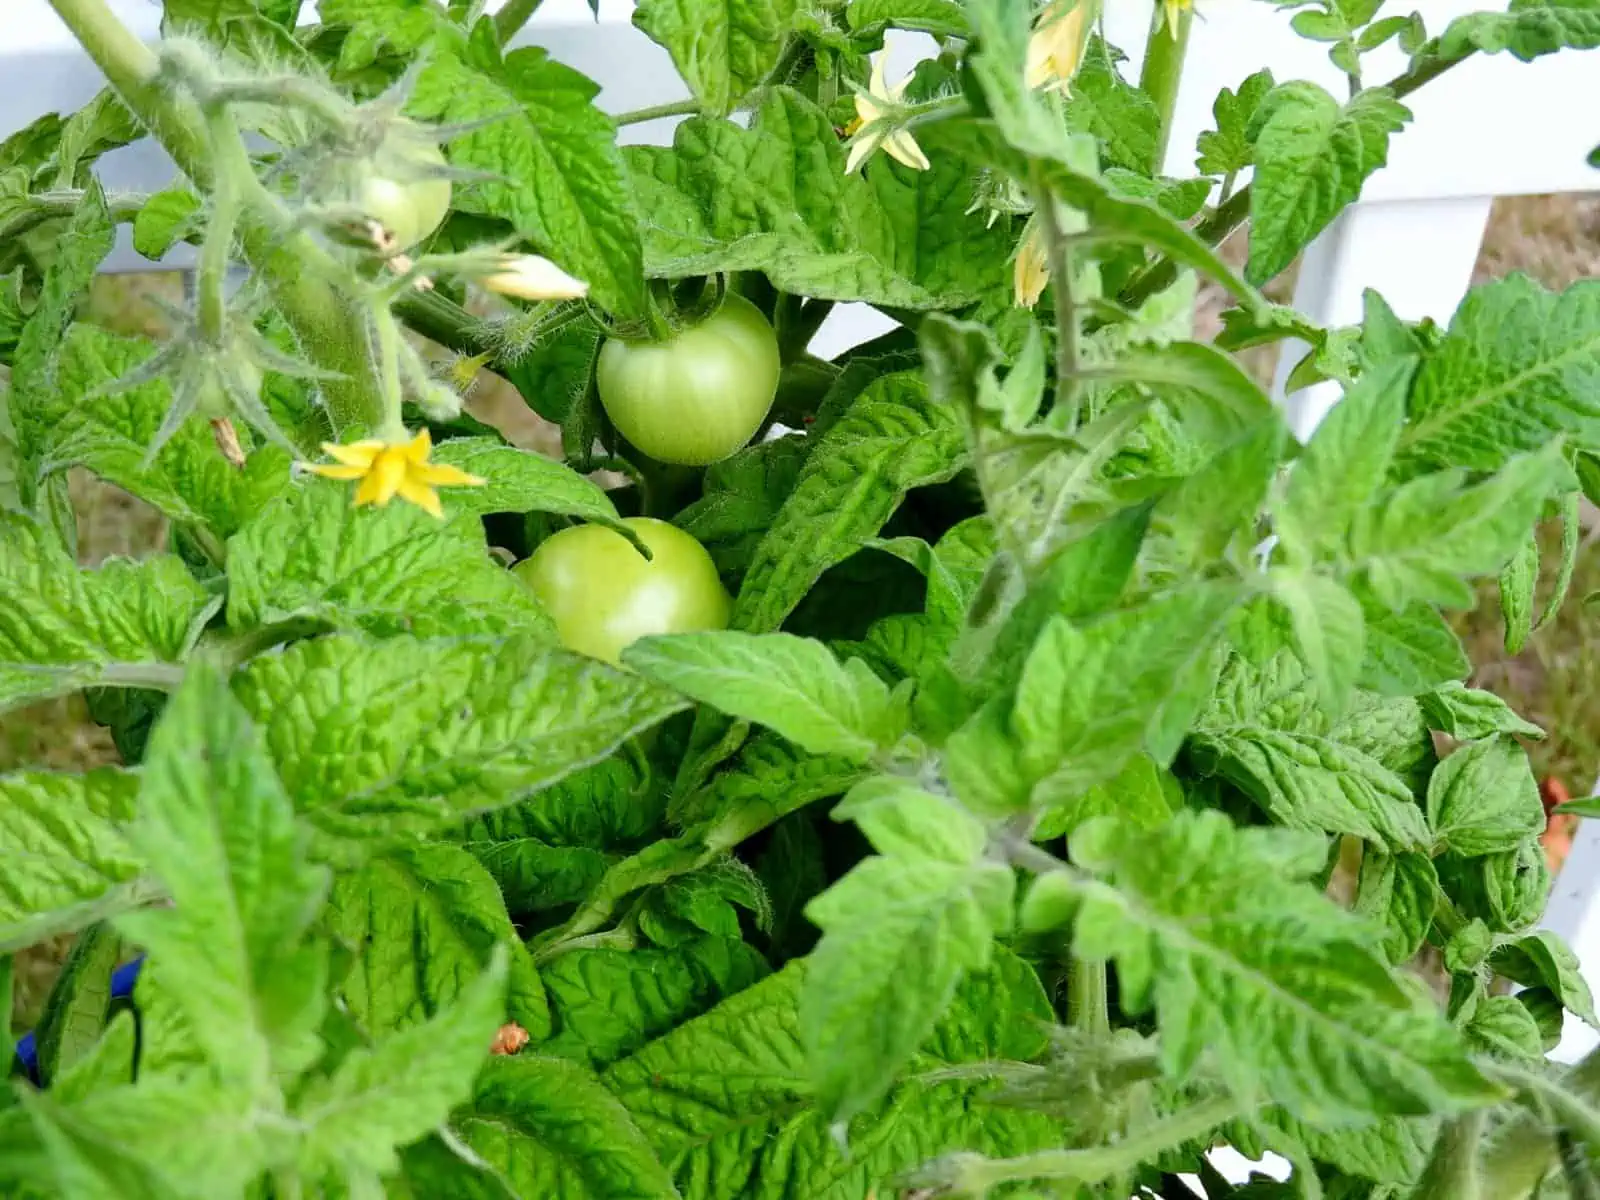 Growing Vegetables In Coco Coir In A GroBucket